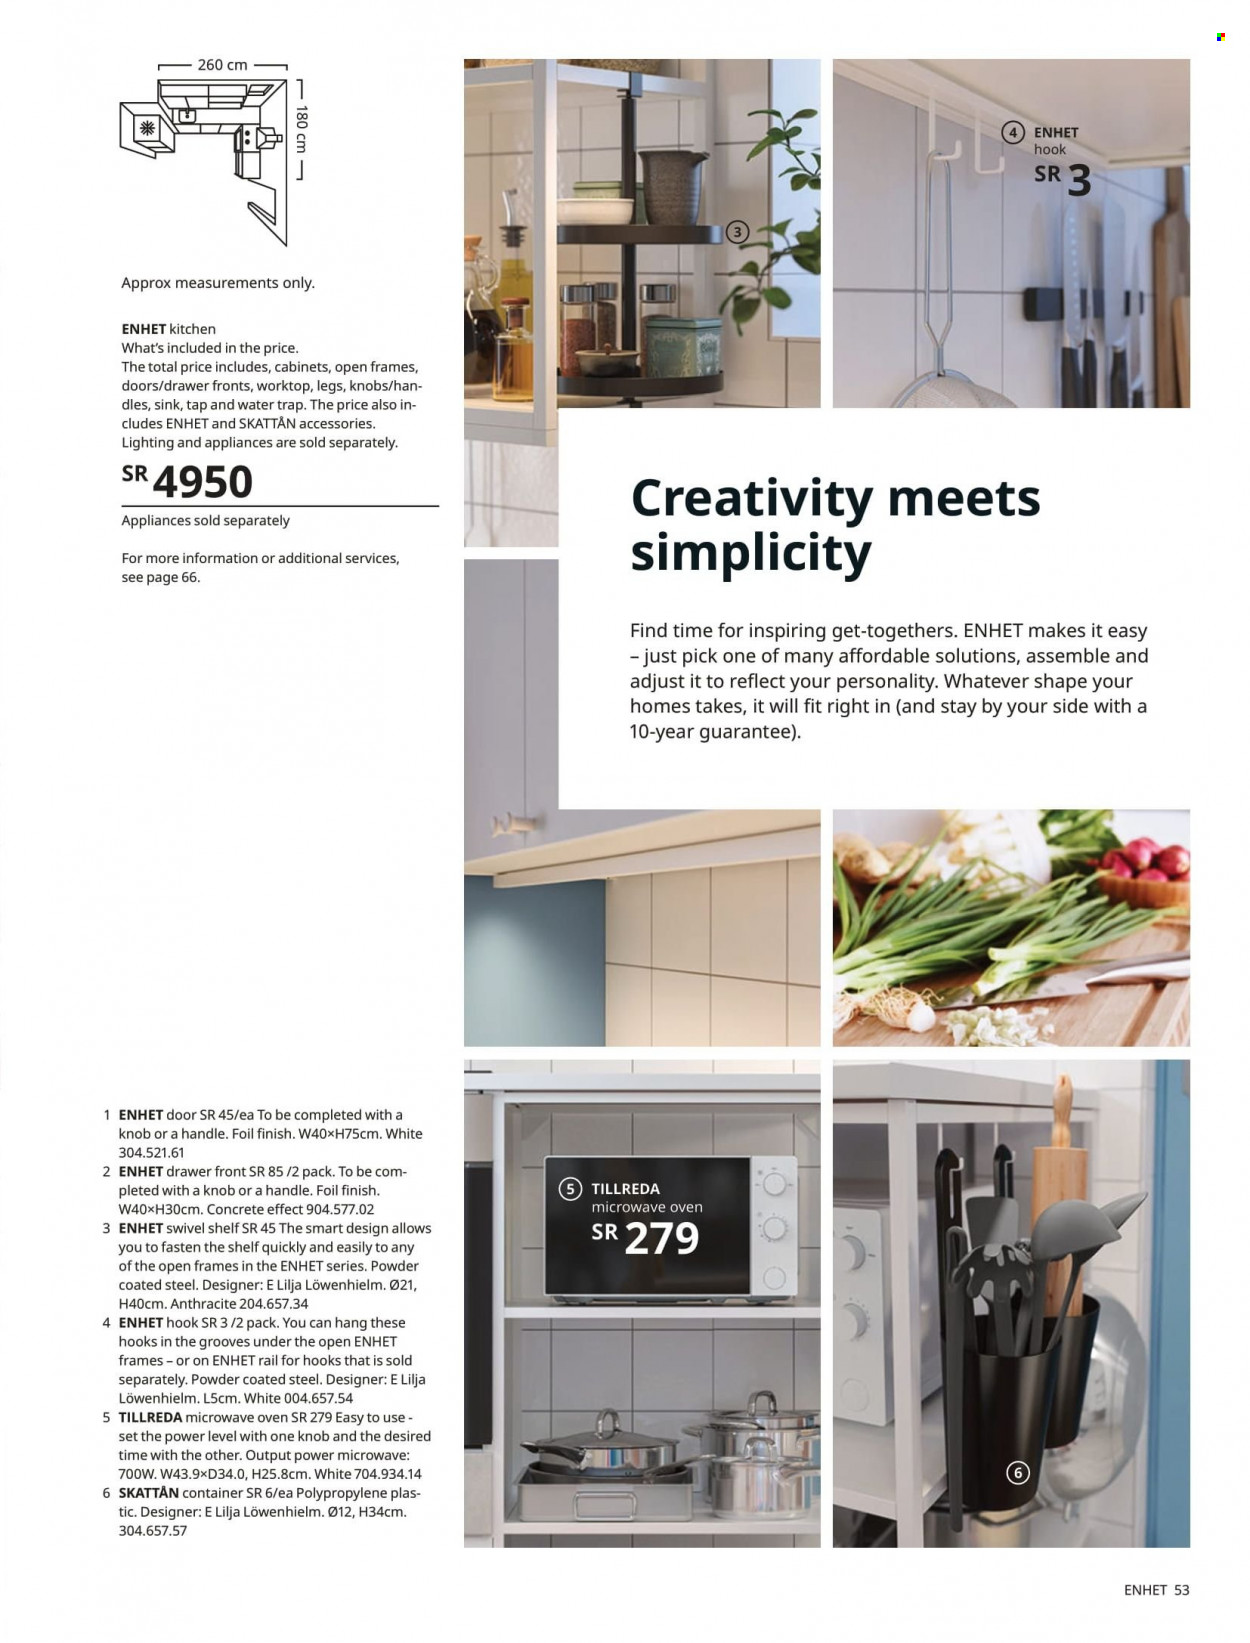 IKEA flyer . Page 53.